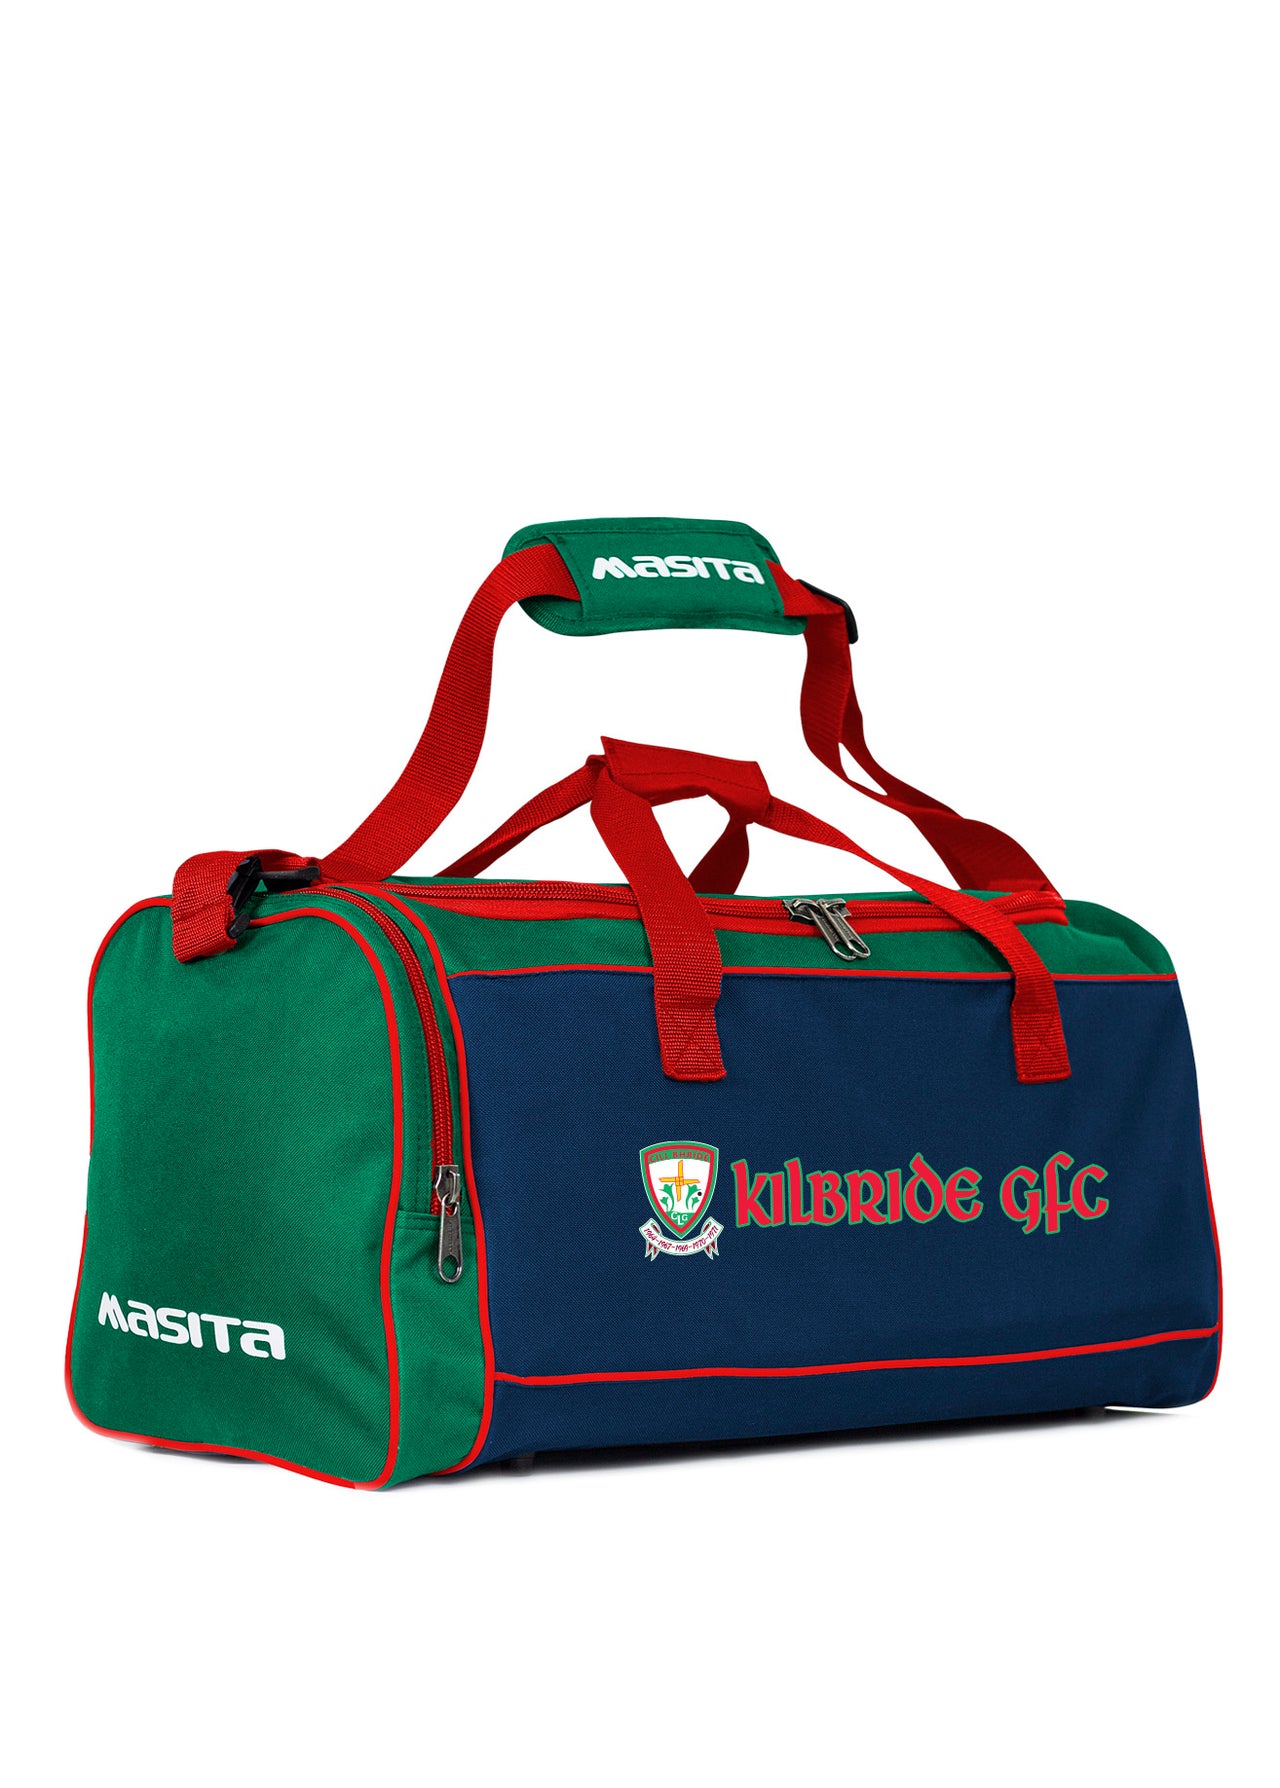 Kilbride CLG GAA Forza Bag Medium